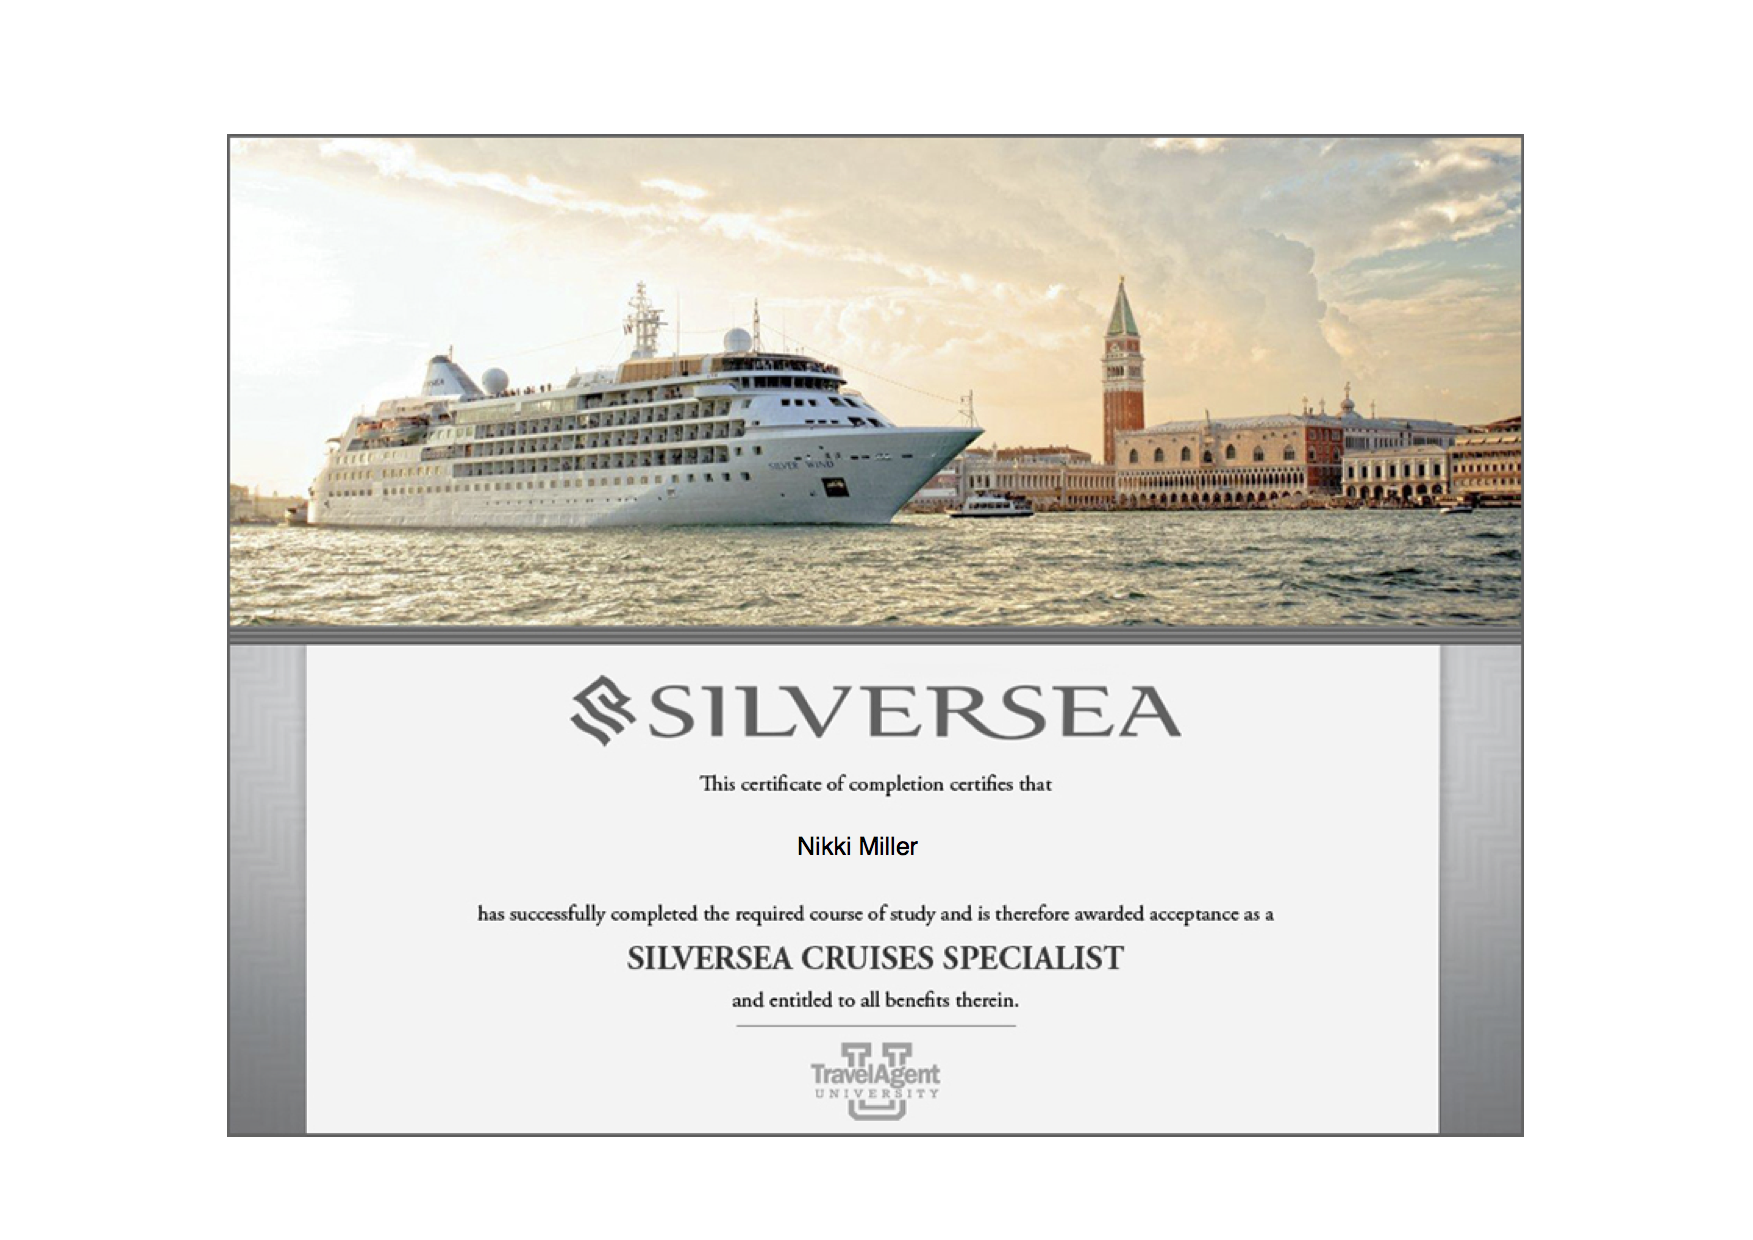 Silversea Specialist - Silversea Diploma - 2014-04-03.png